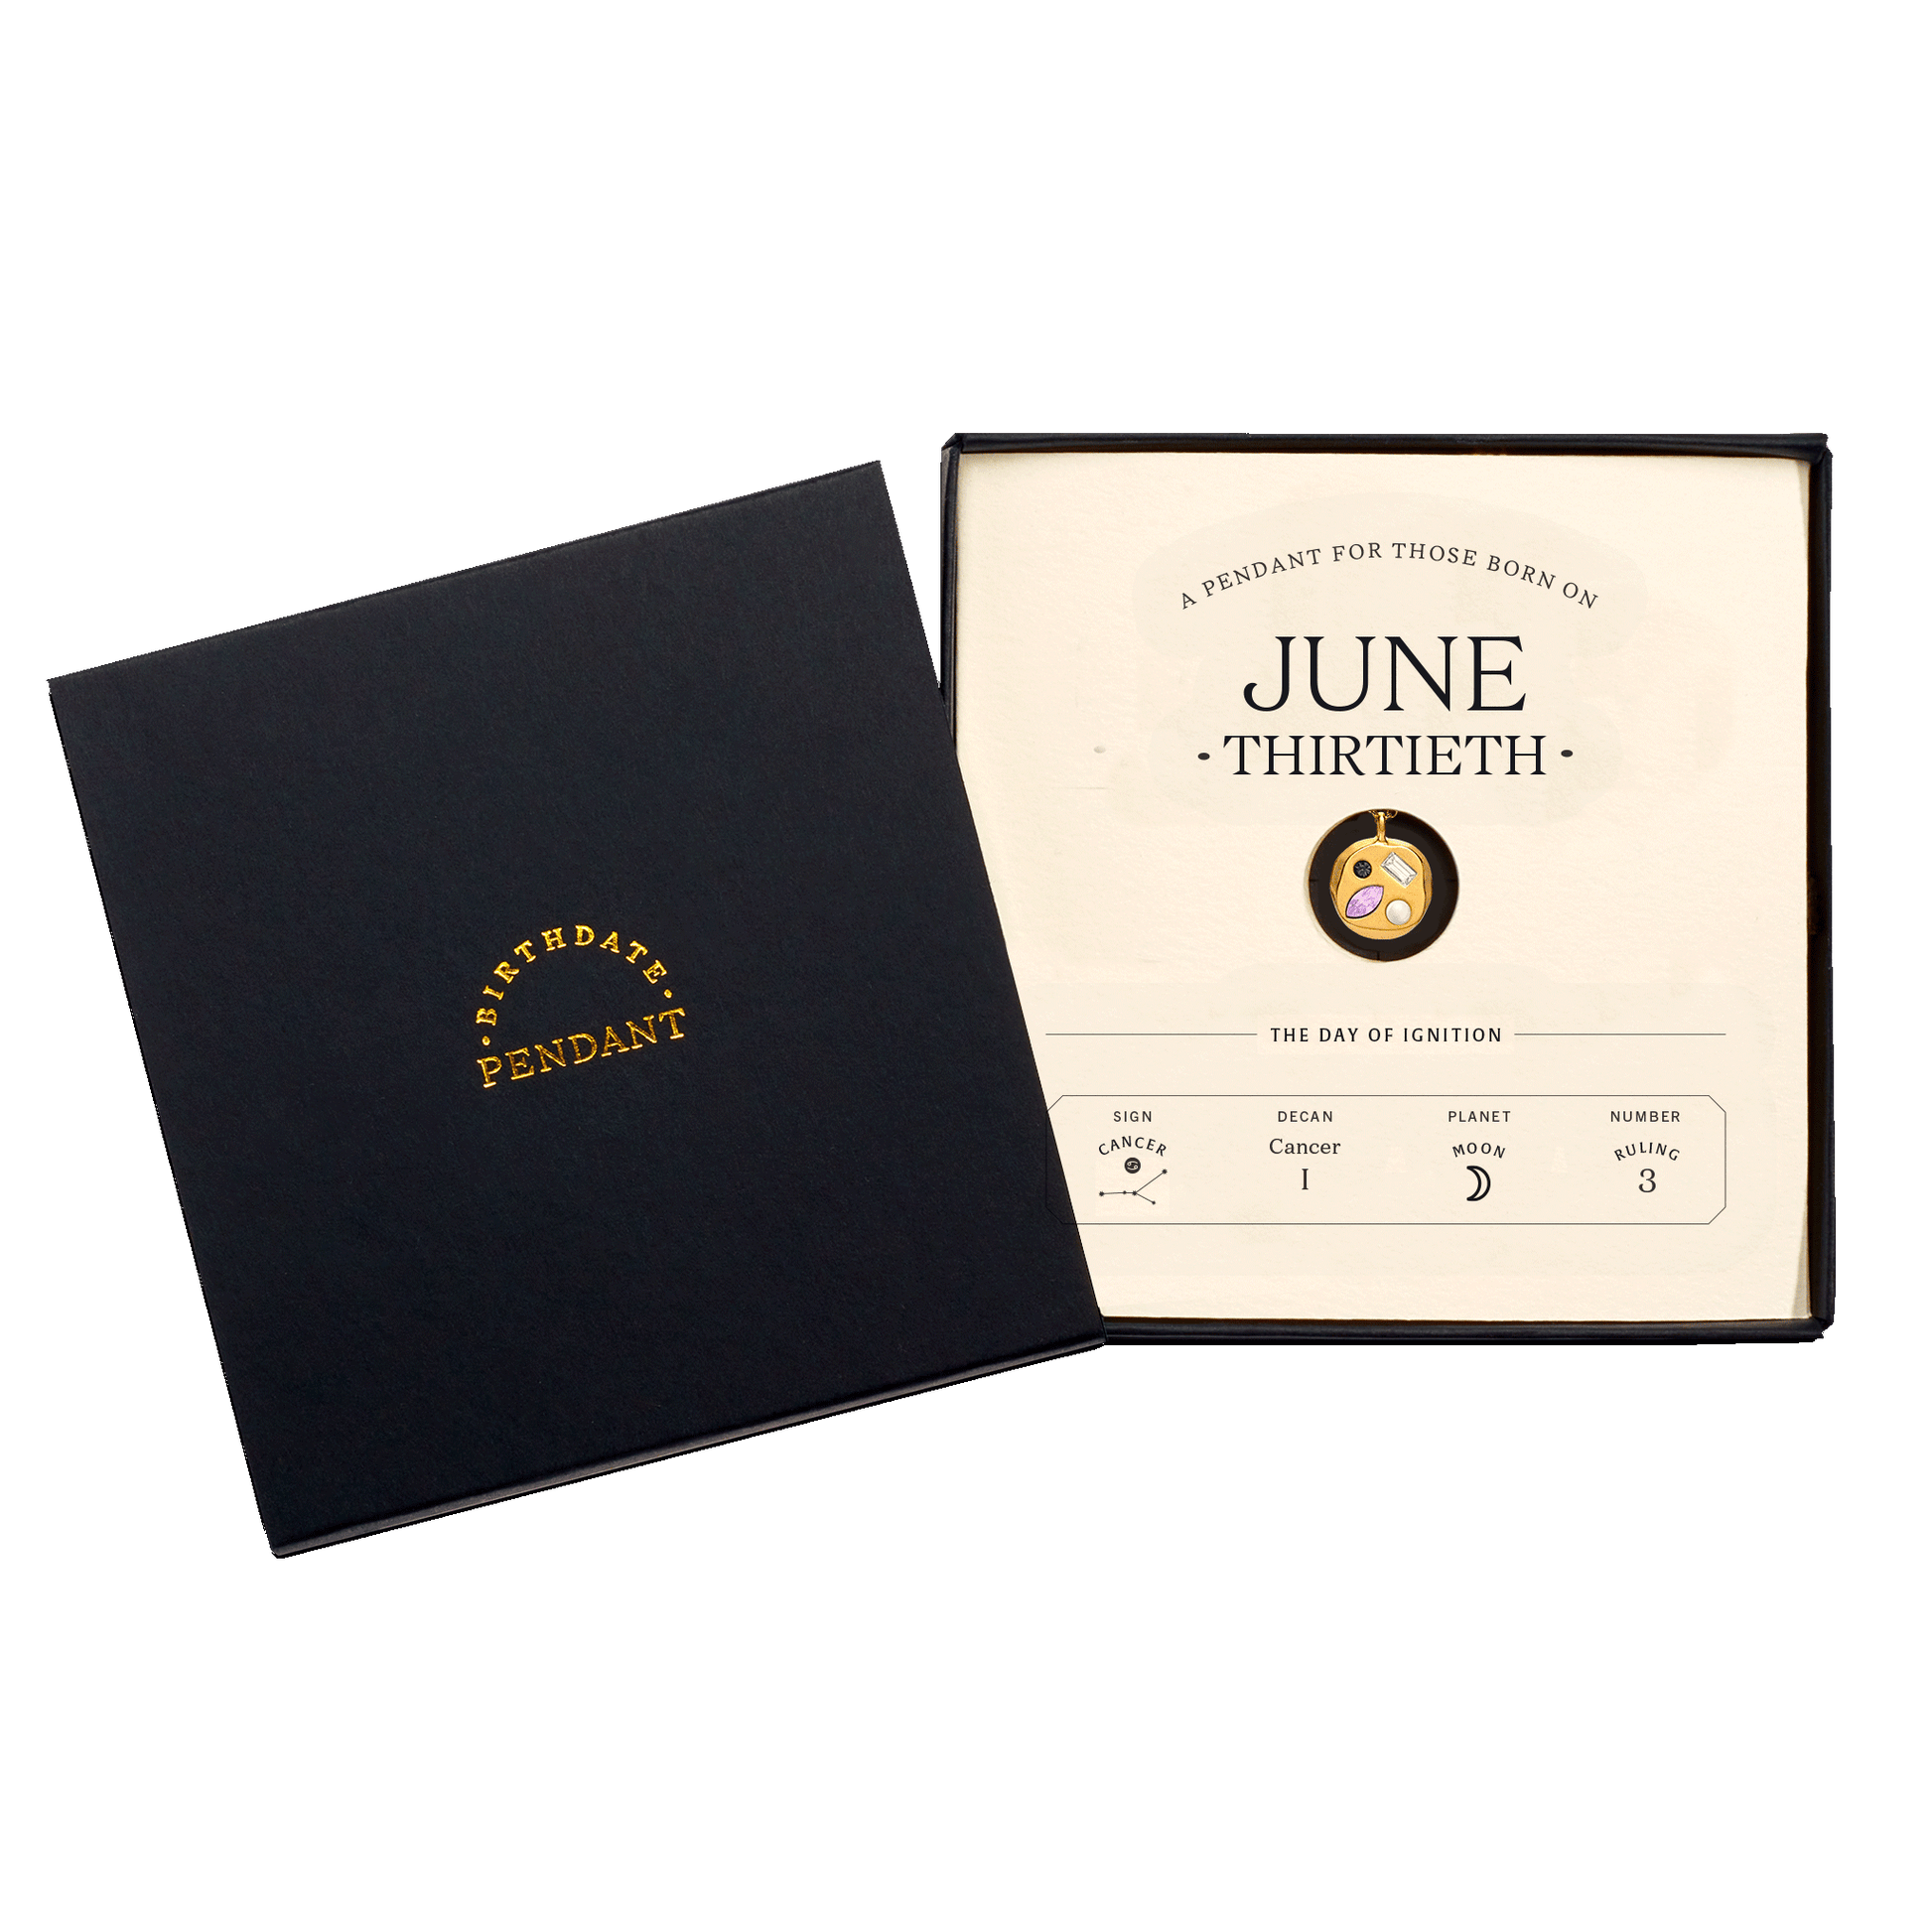 The June Thirtieth Pendant inside its box